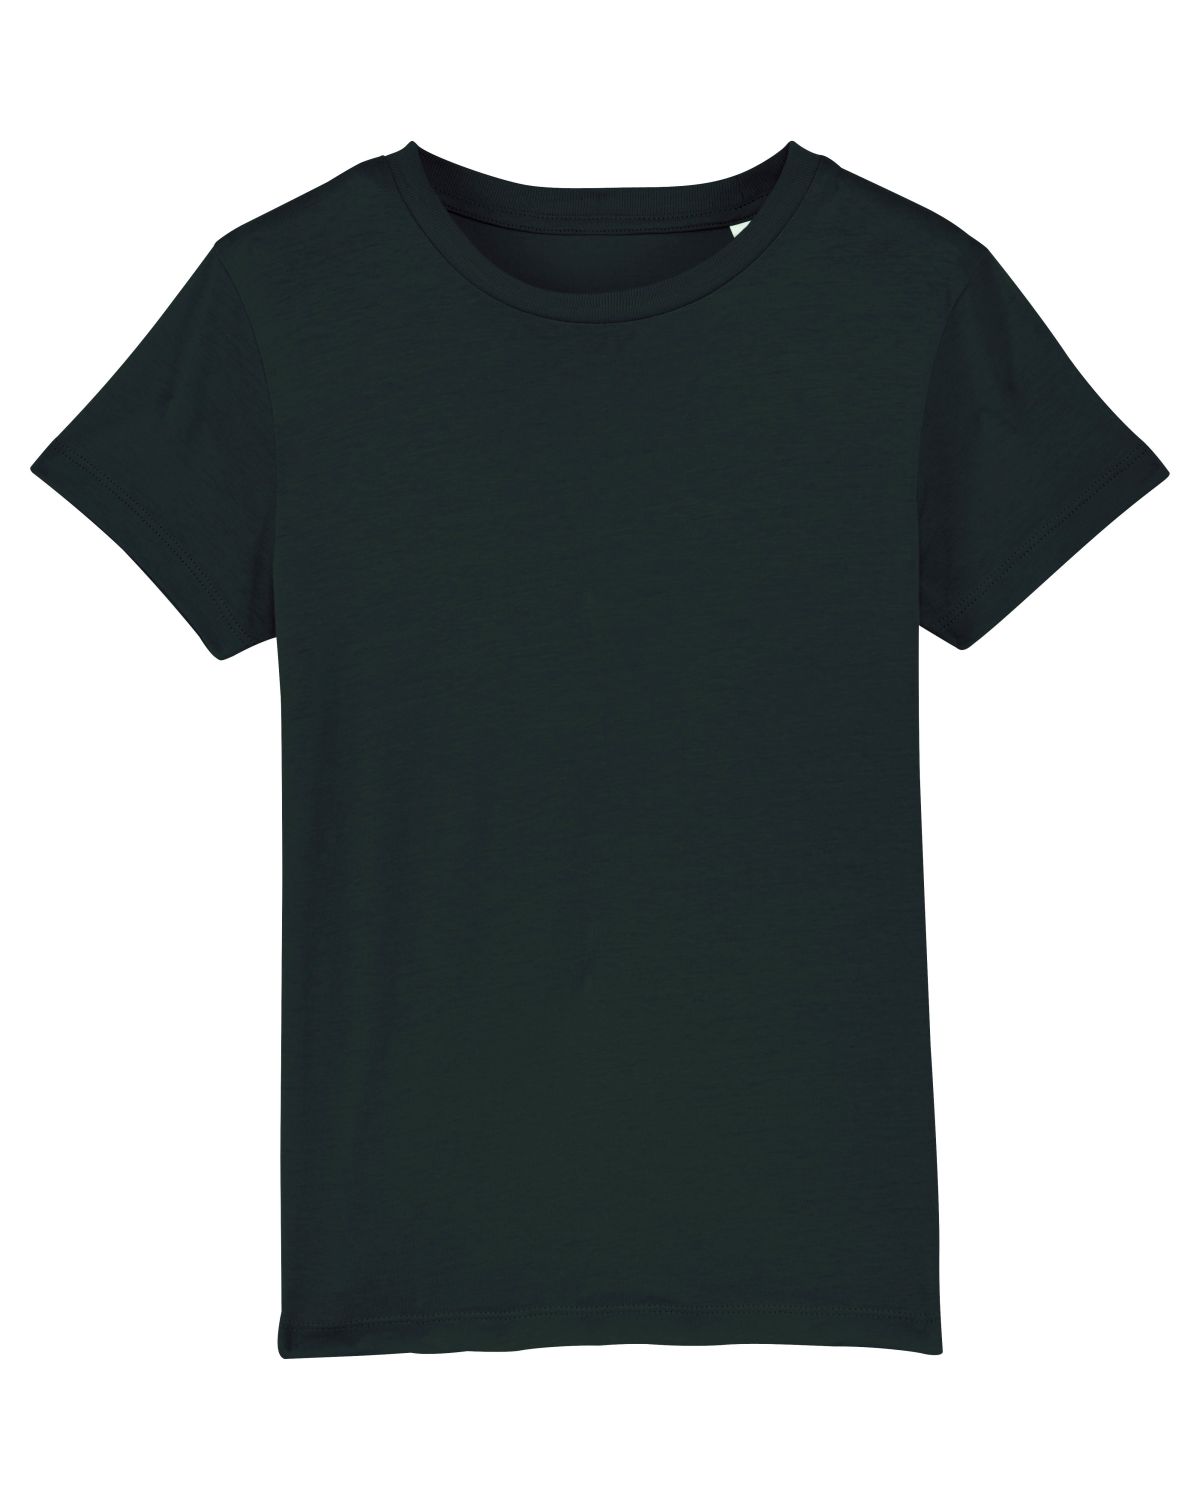 Stanley/Stella's - Mini Creator T-shirt - Black